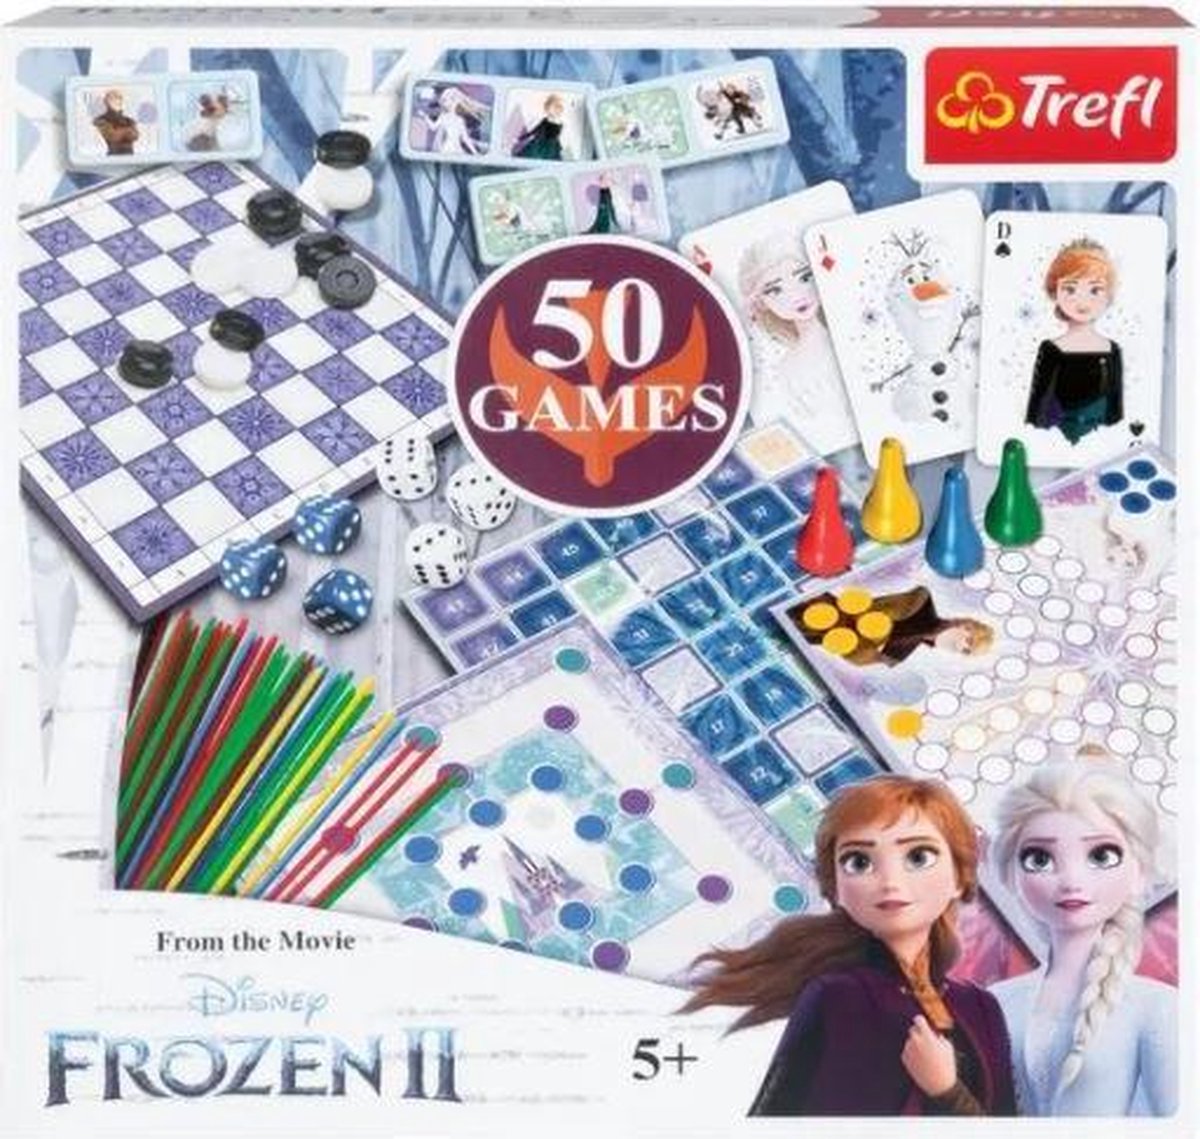 smal Egypte luisteraar TREFL bordspellenset (50 spellen) Frozen II | Games | bol.com